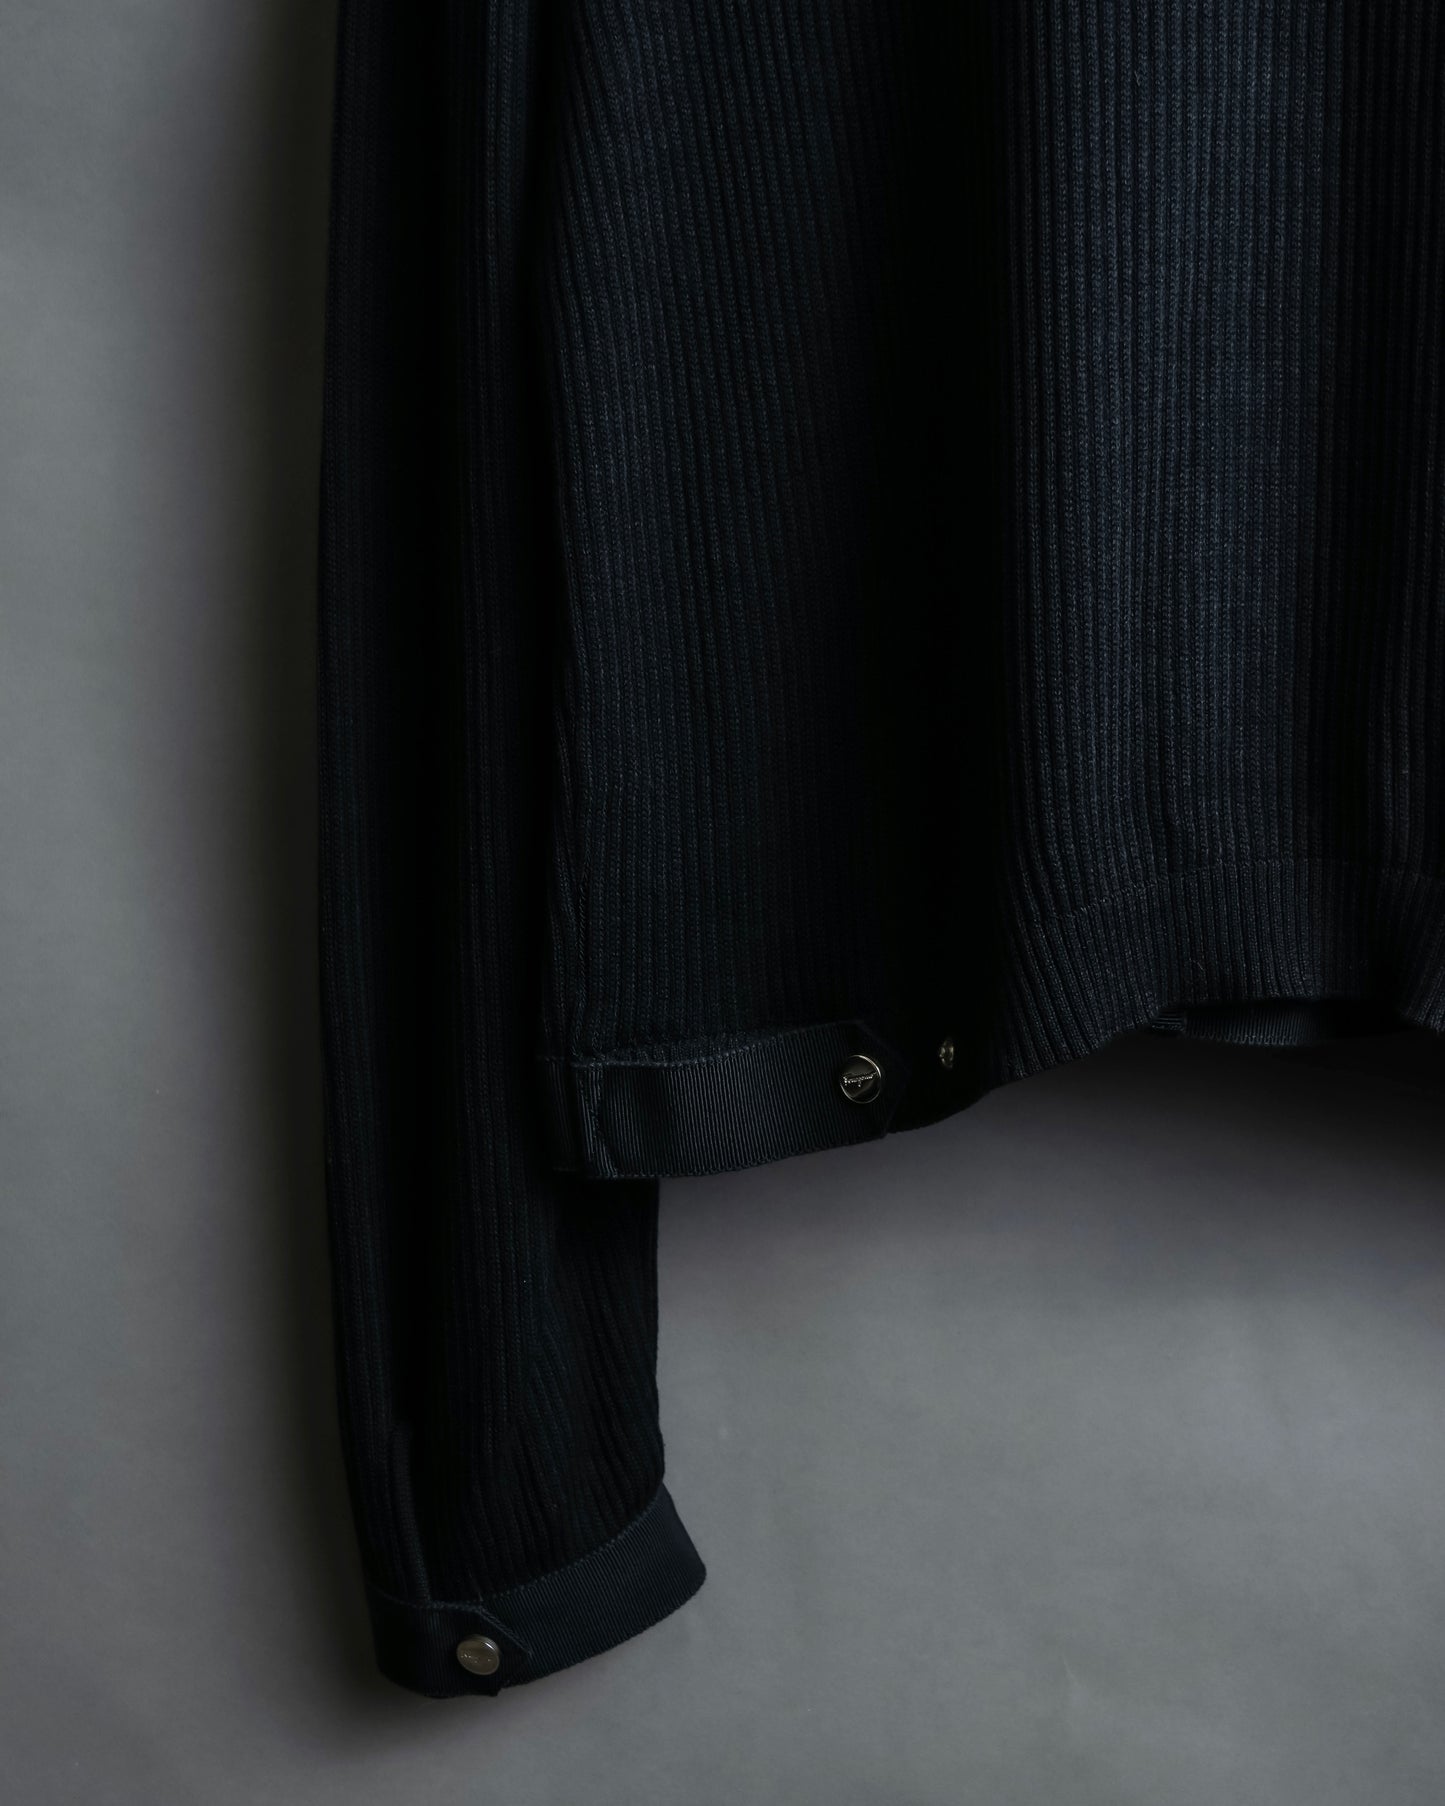 "Salvatore Ferragamo"Cotton x rayon summer knit shirt